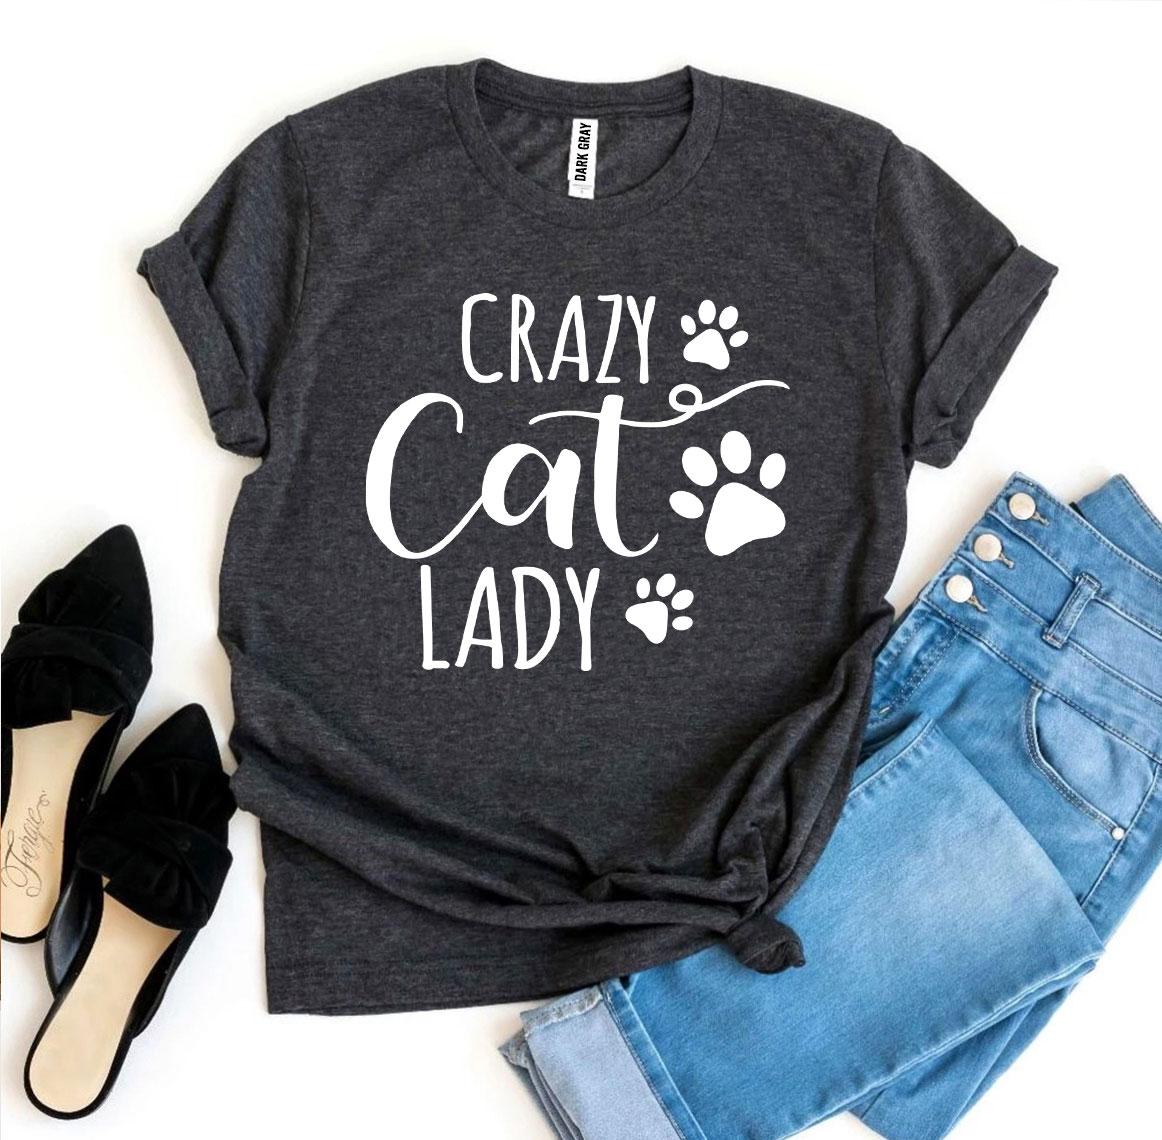 Crazy Cat Lady T-shirt